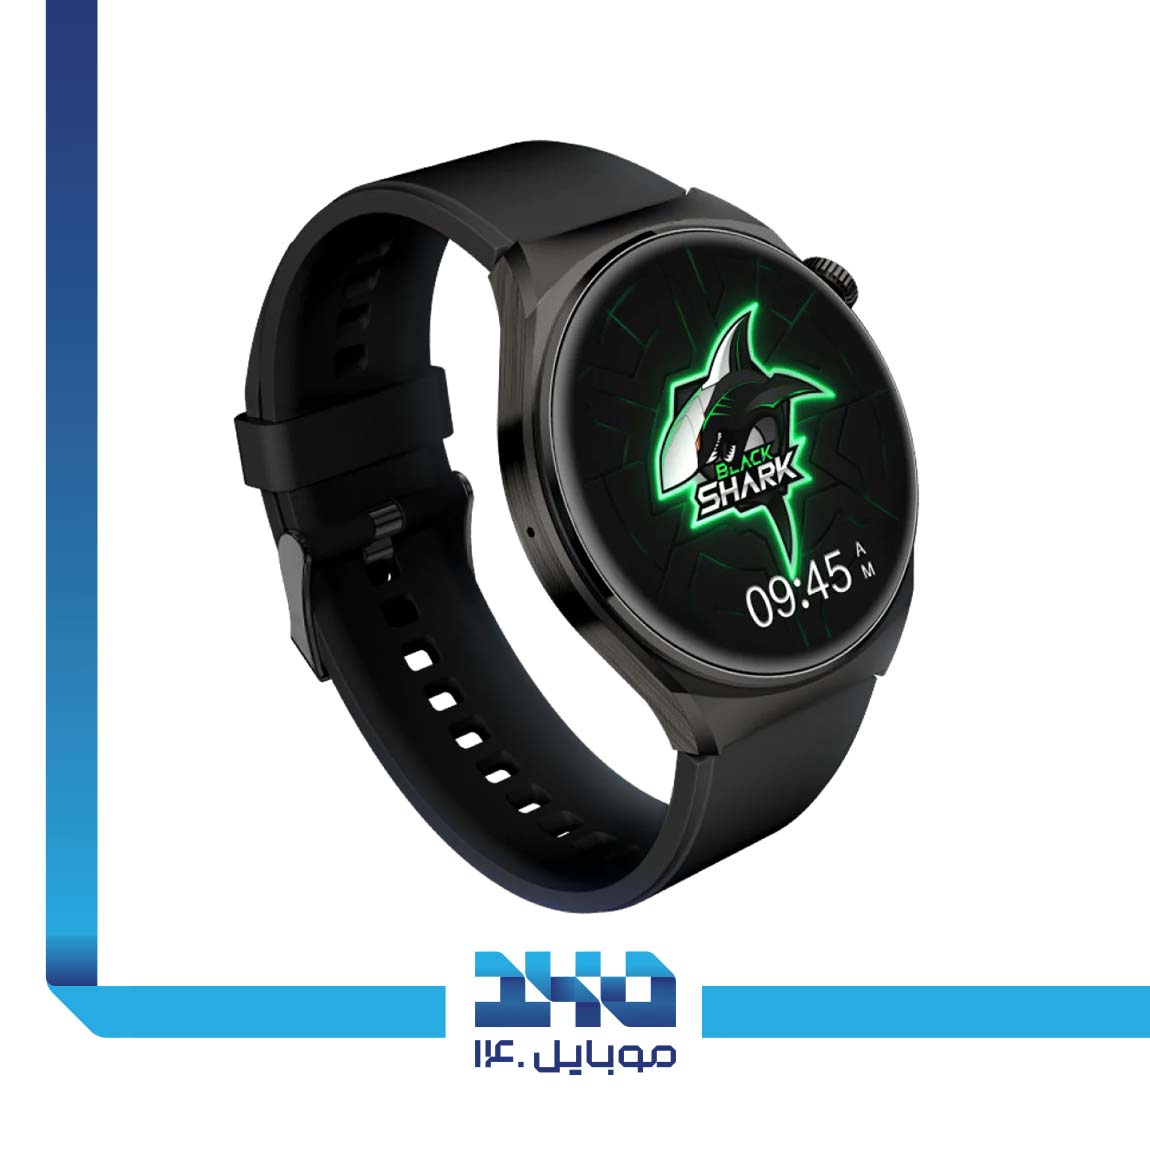 Black Shark S1 Smart Watch 1